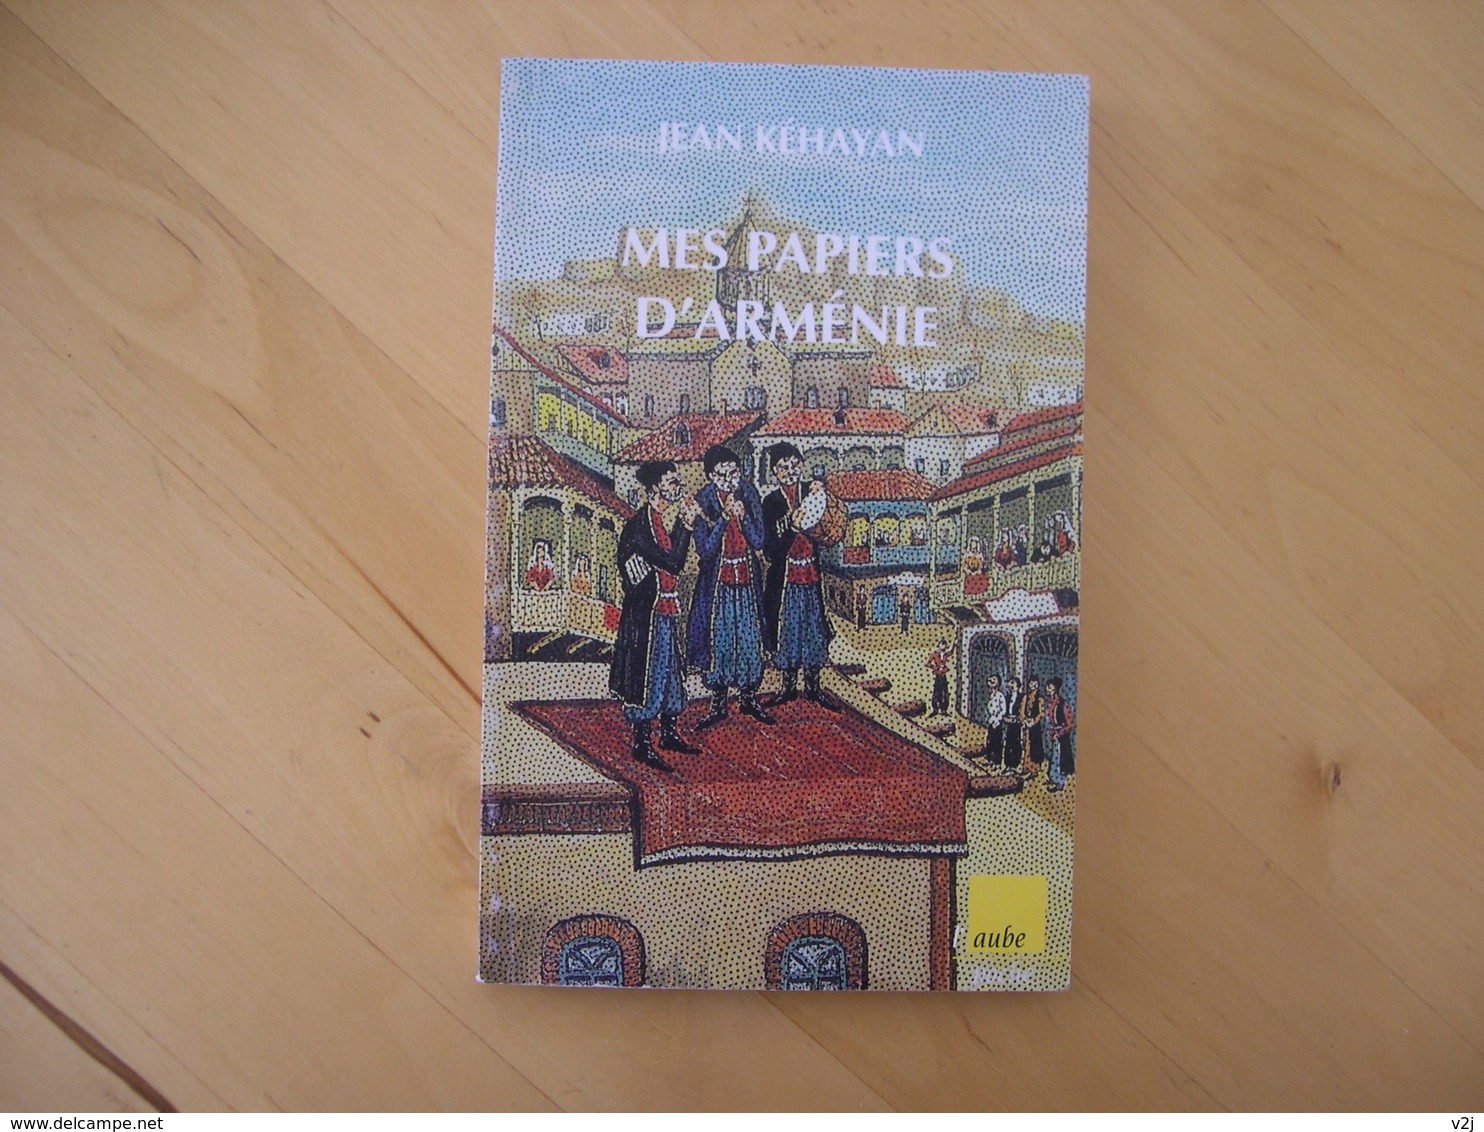 Mes Papiers D'arménie - Jean Kéhayan - History